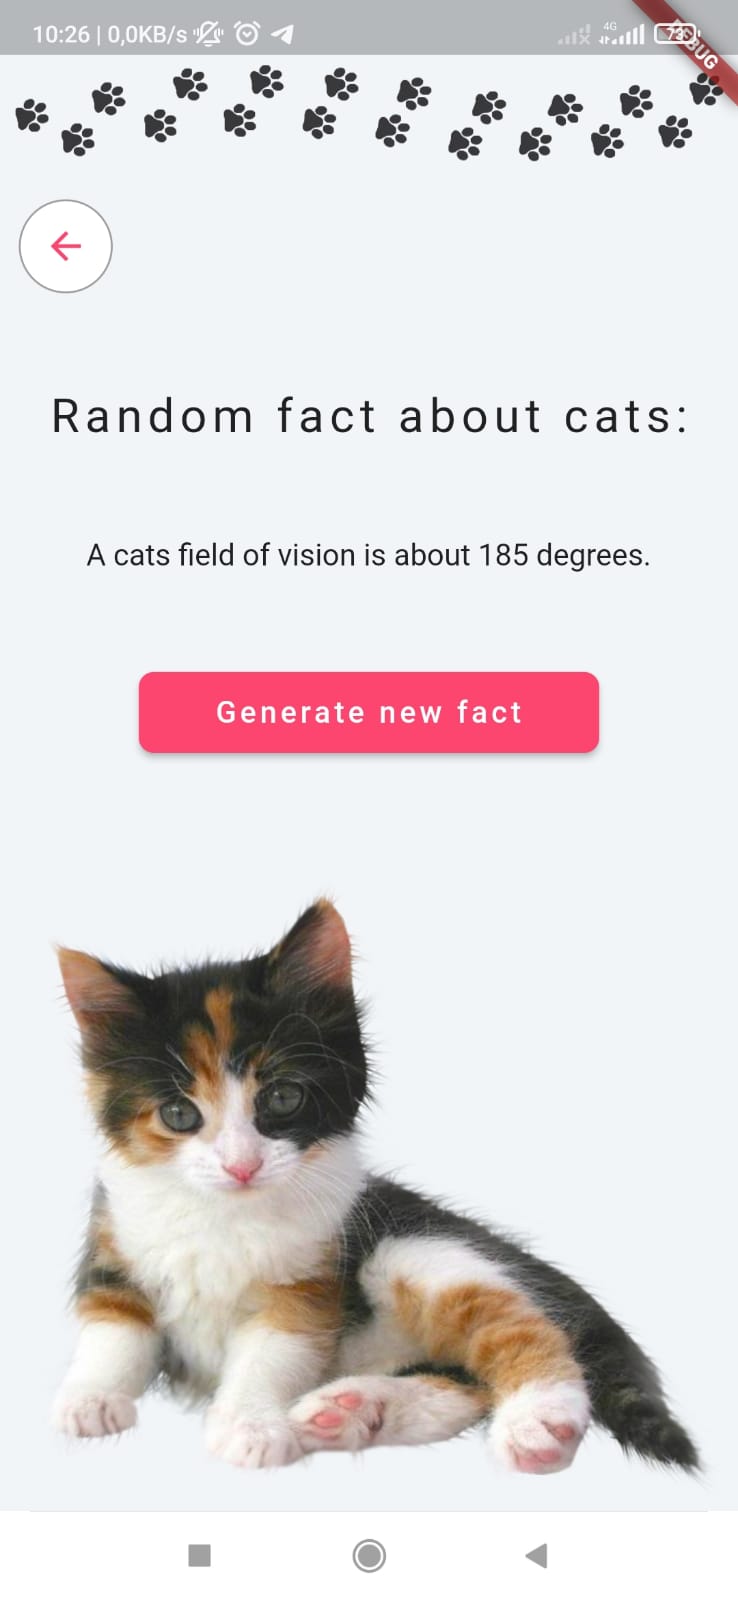 Random Cat Facts App built with Flutter